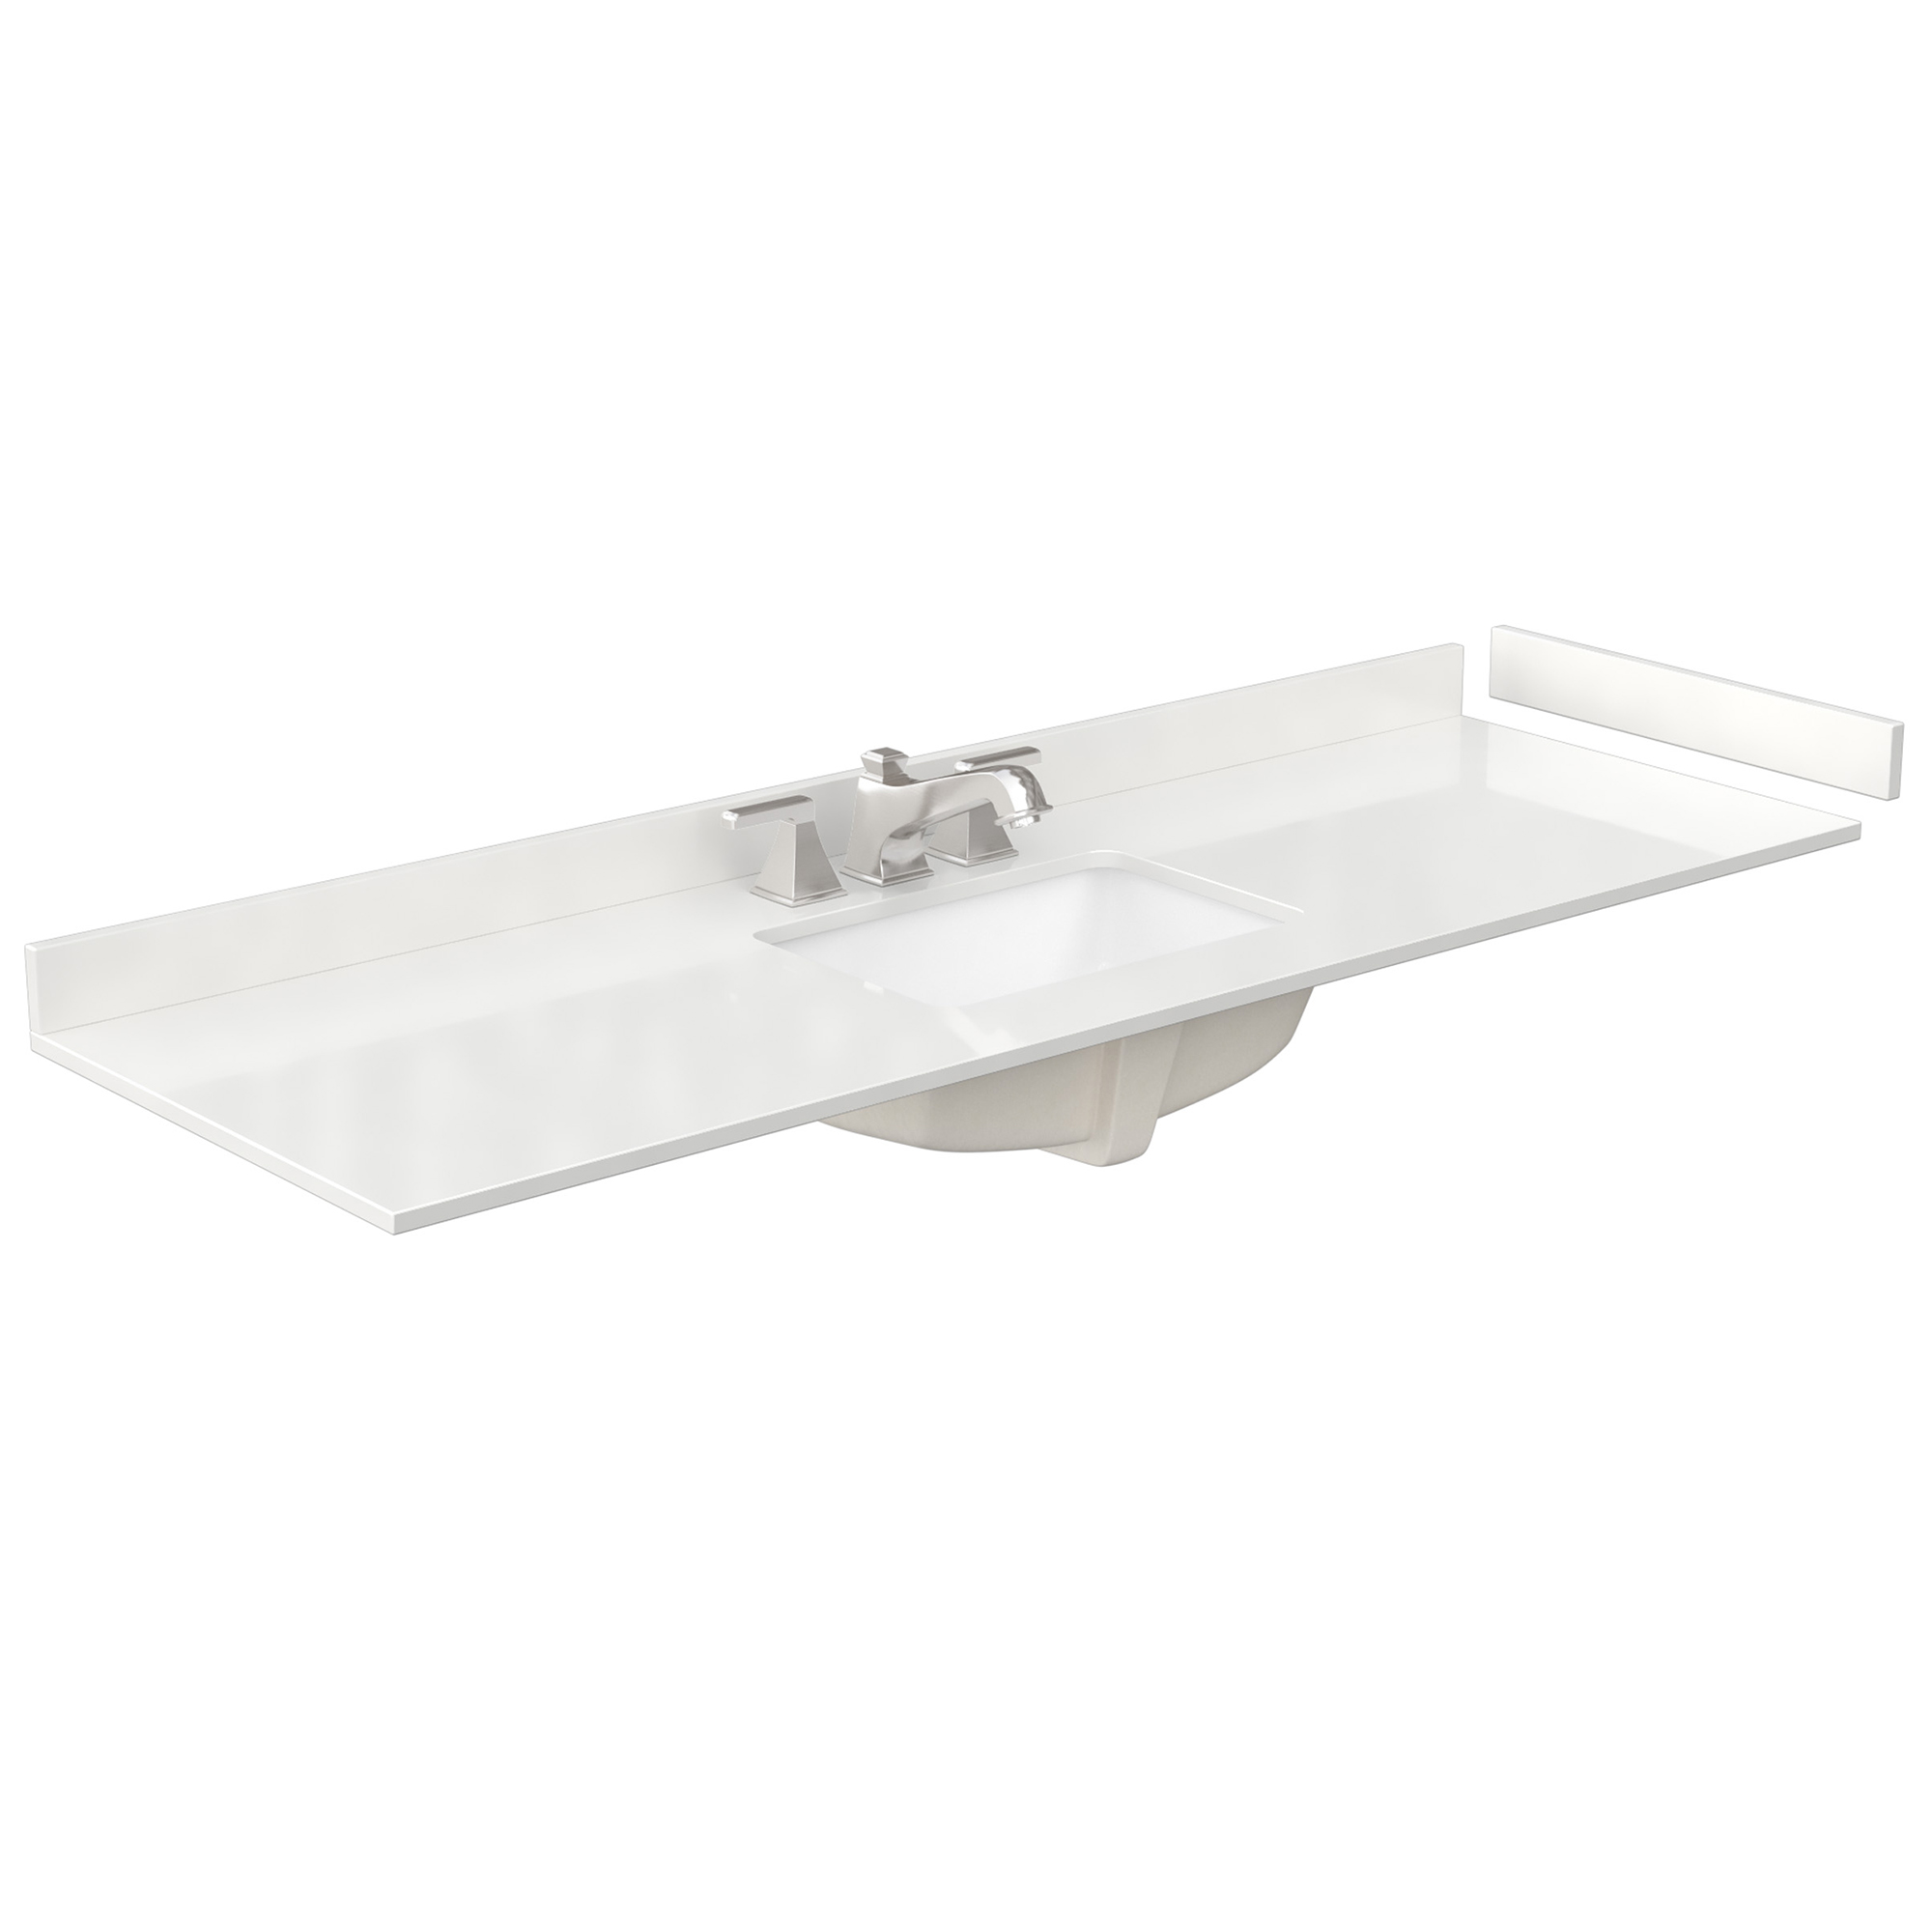 66" Single Countertop - White Quartz (1000) with Undermount Square Sink (3-Hole) - Includes Backsplash and Sidesplash WCFQC366STOPUNSWQ